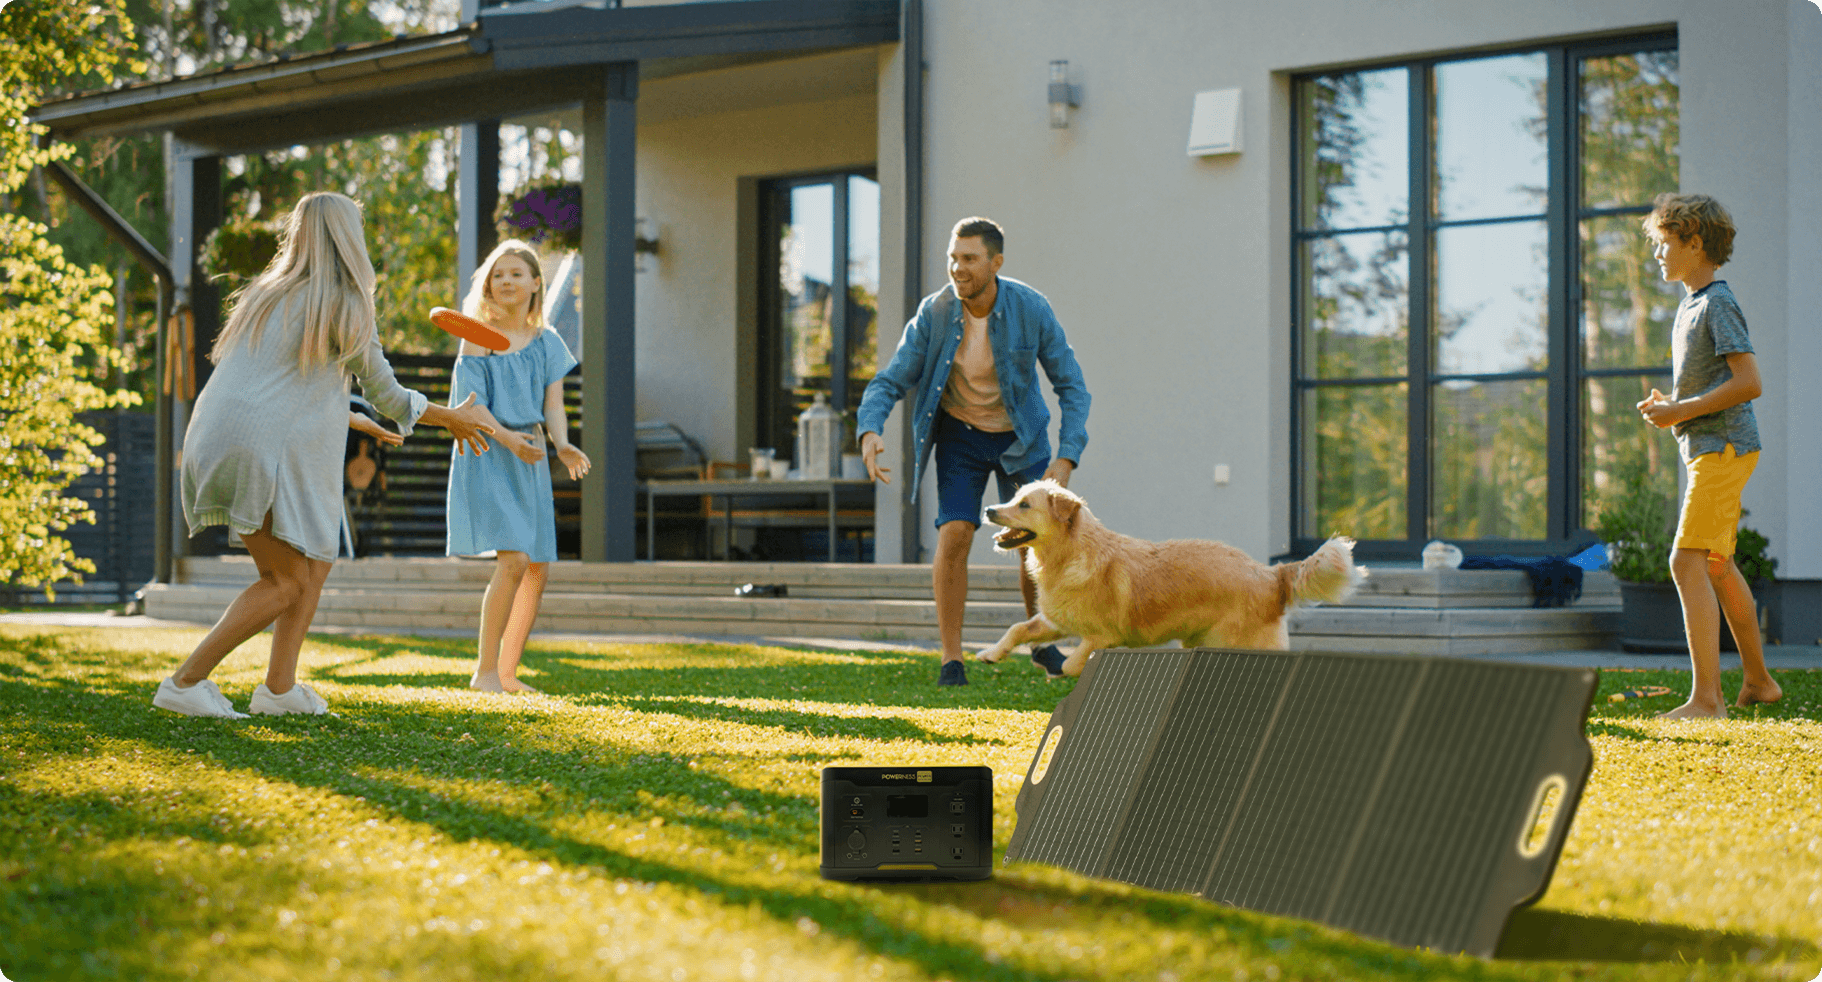 Use Solar Generator in backyard with family